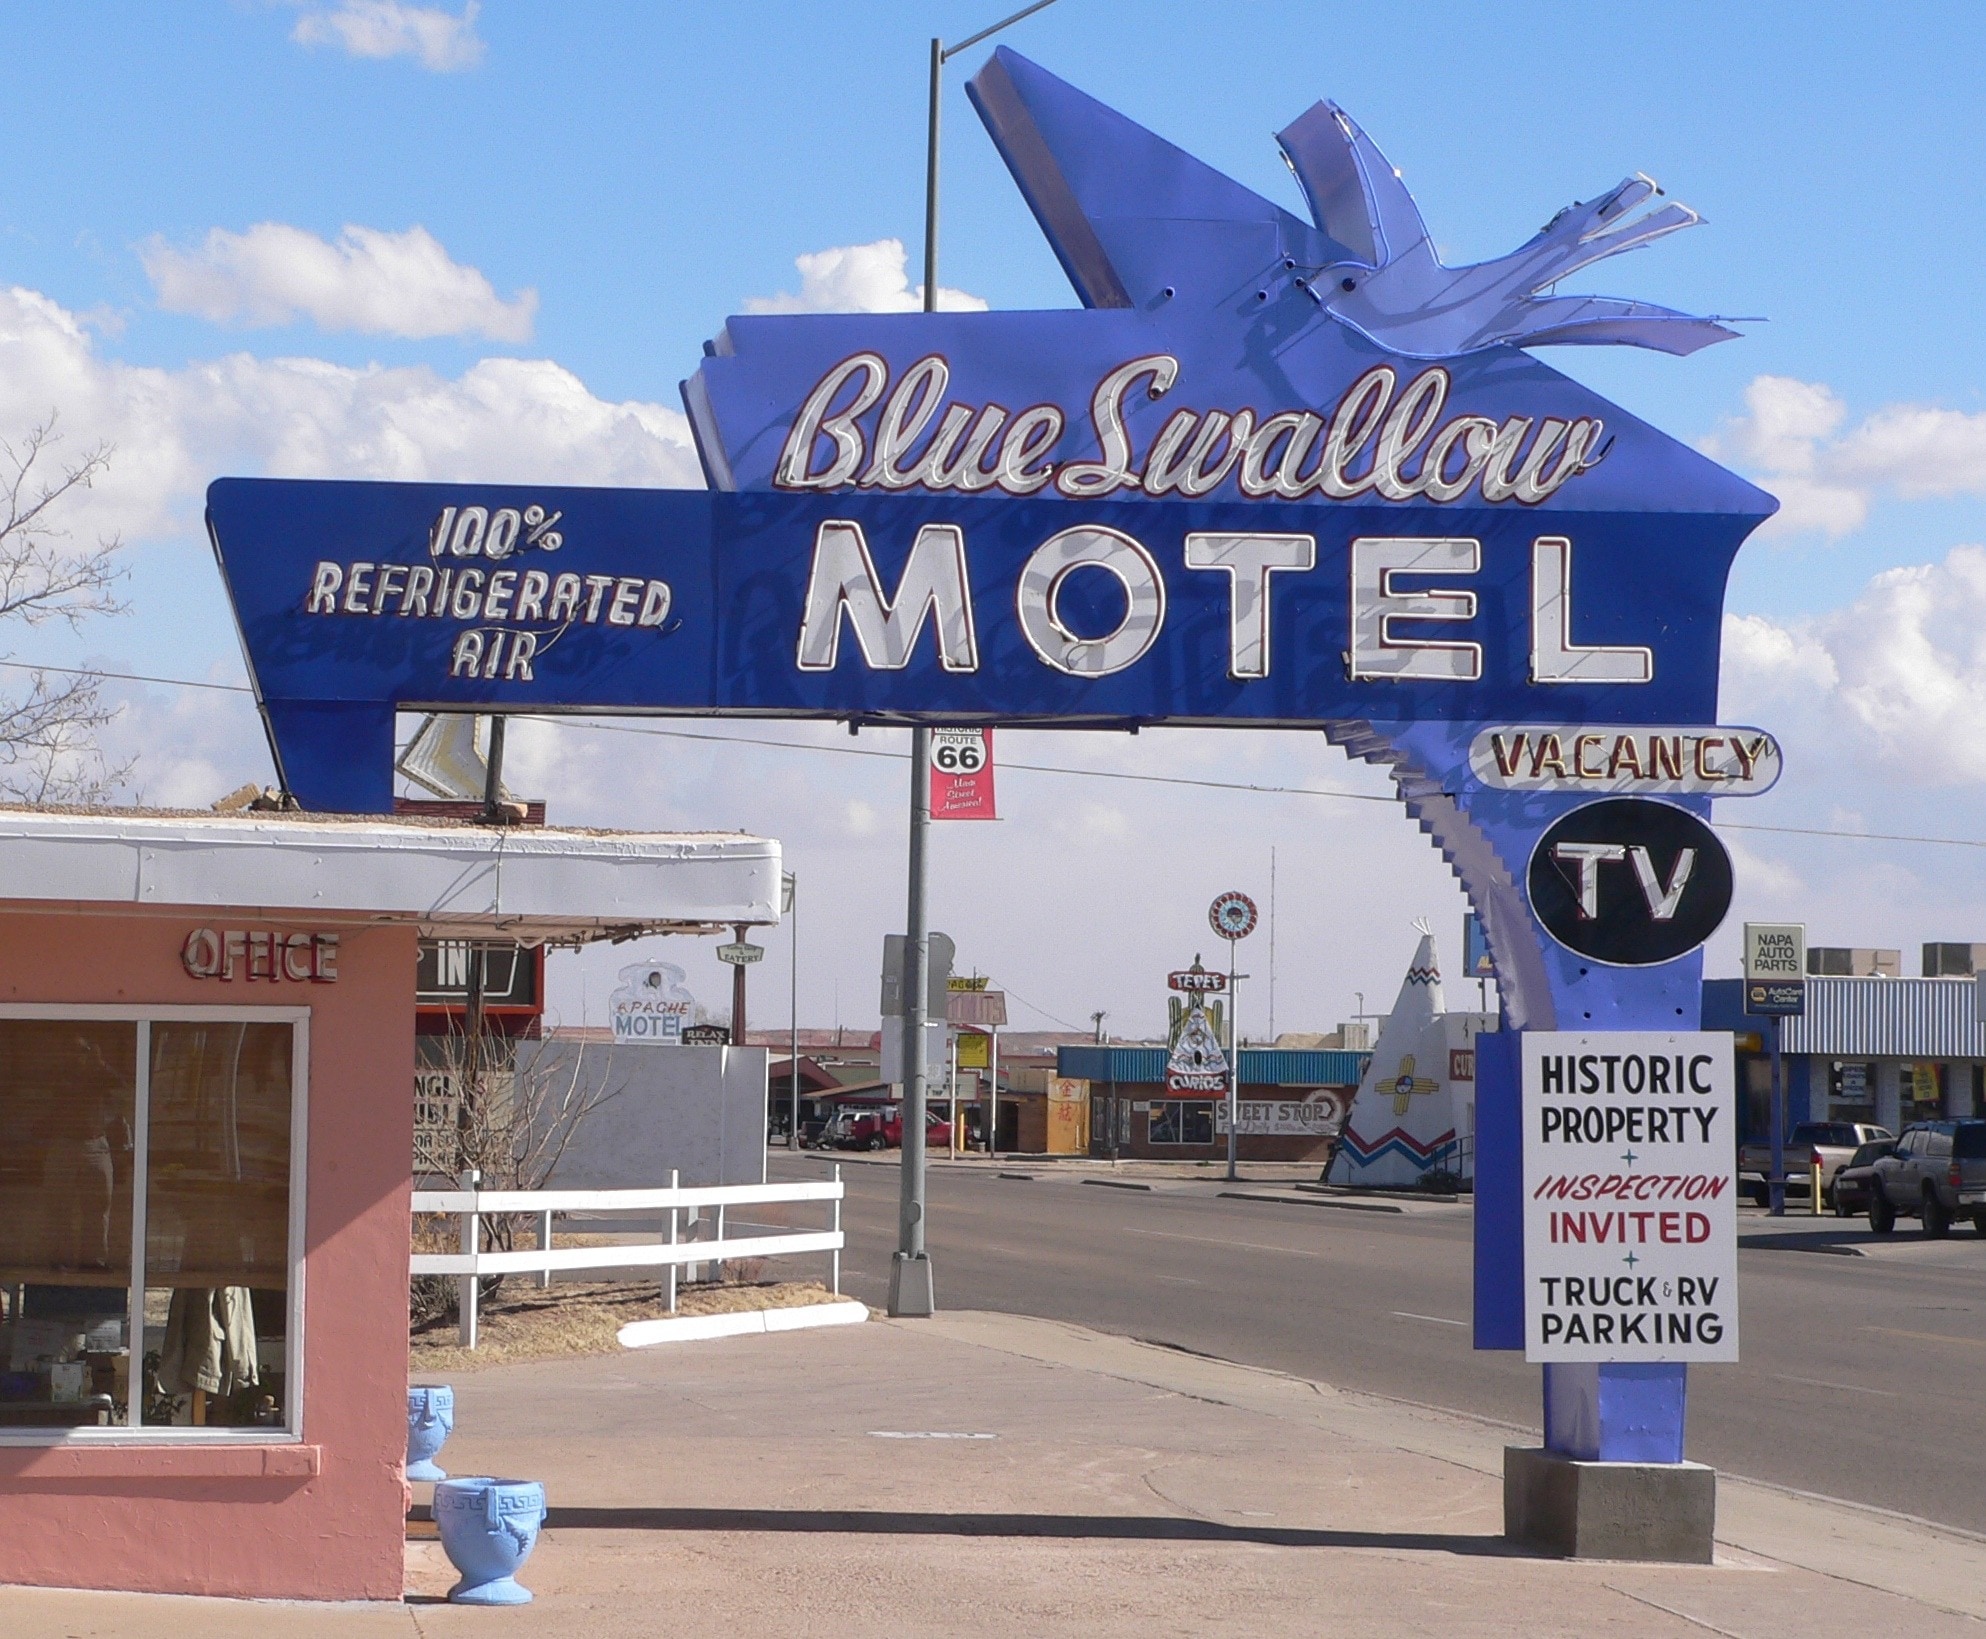 blue swallow motel vacancy tv signage